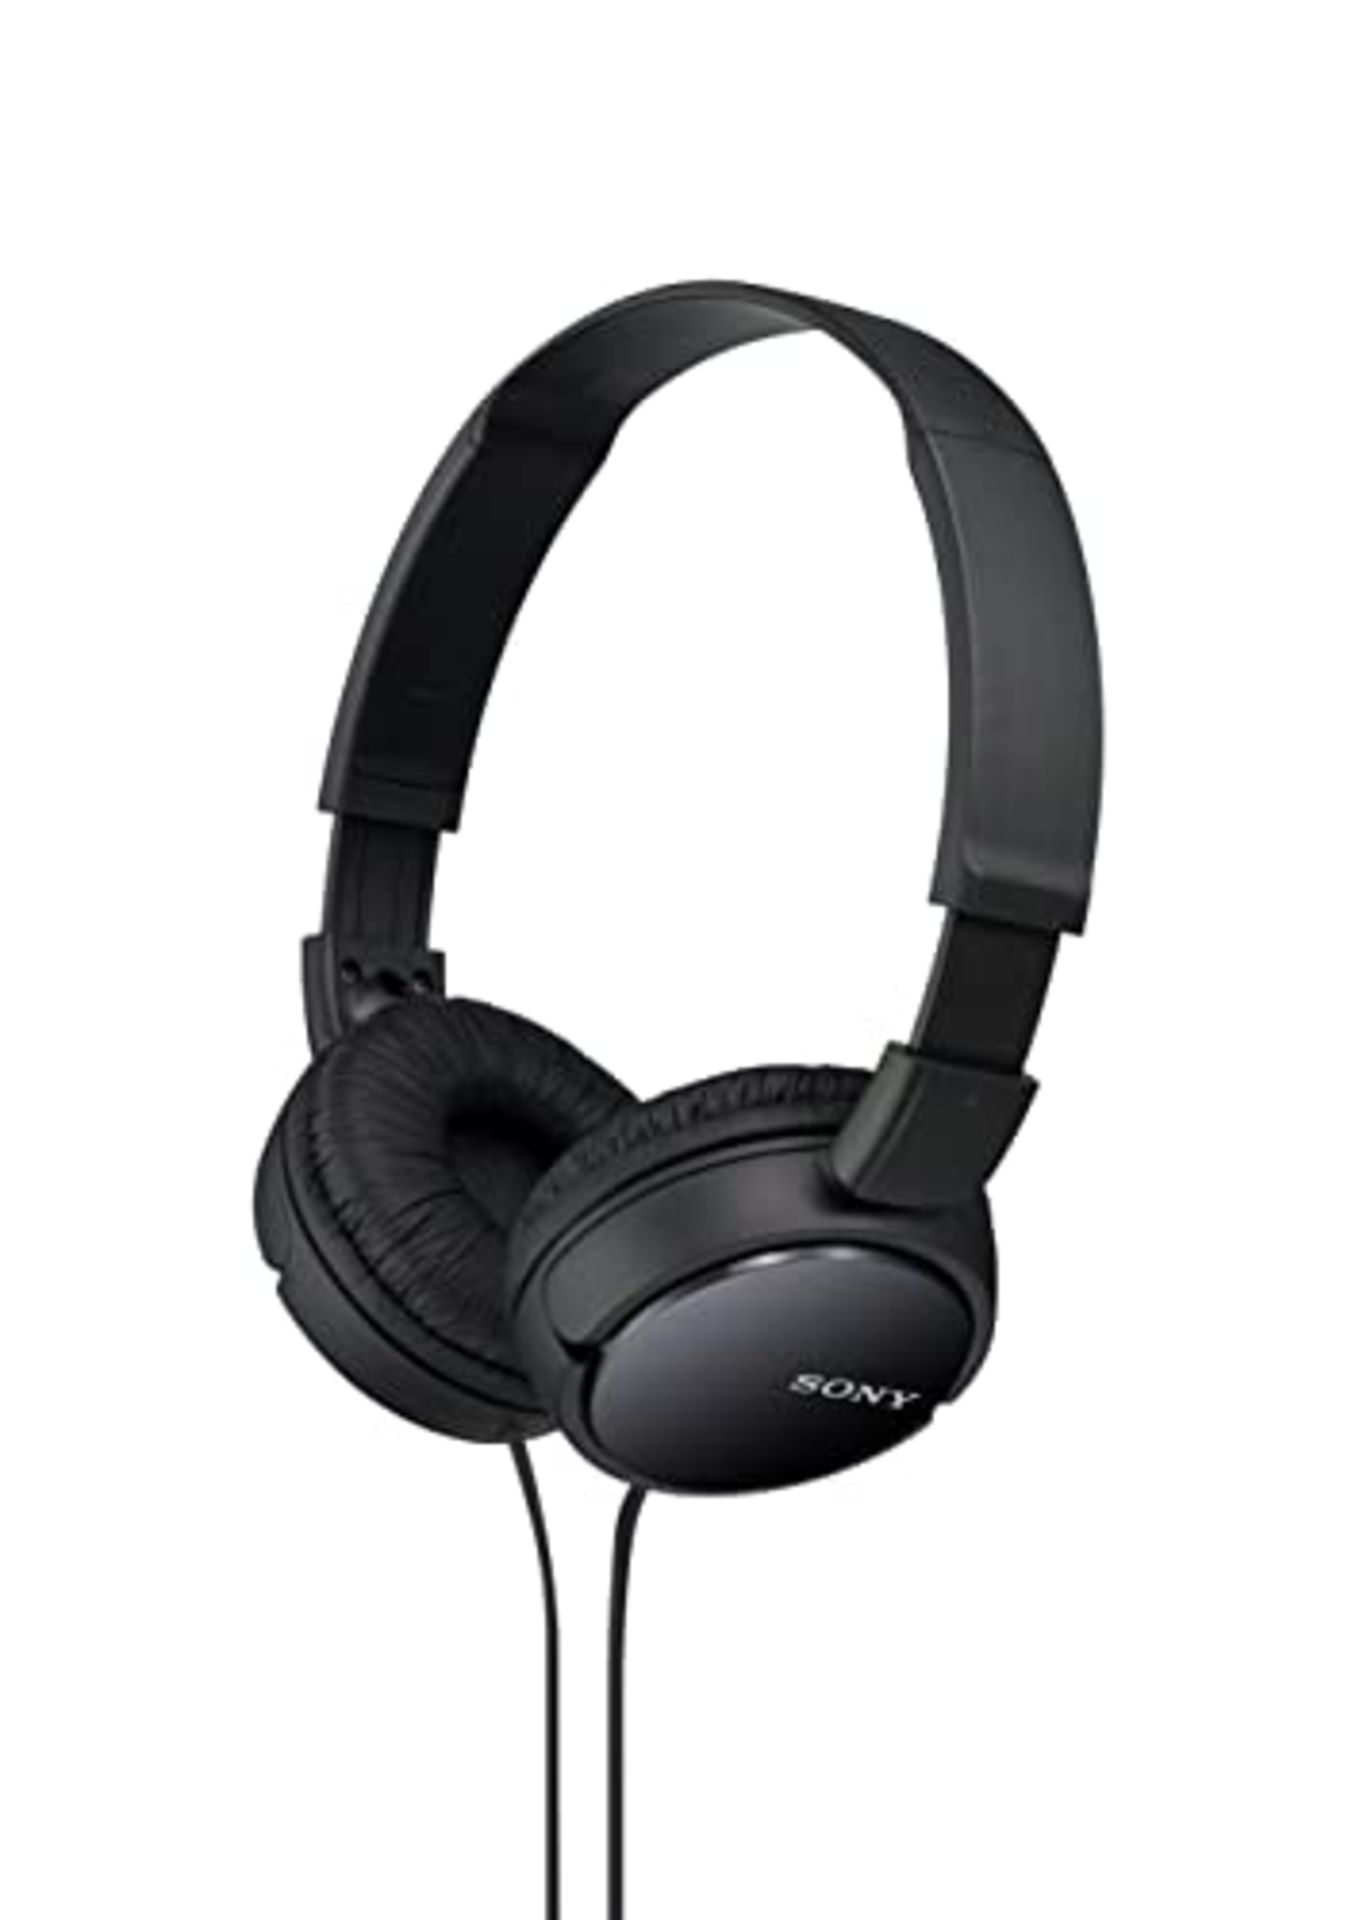 Sony MDR-ZX110 foldable headband headphones, black, 25